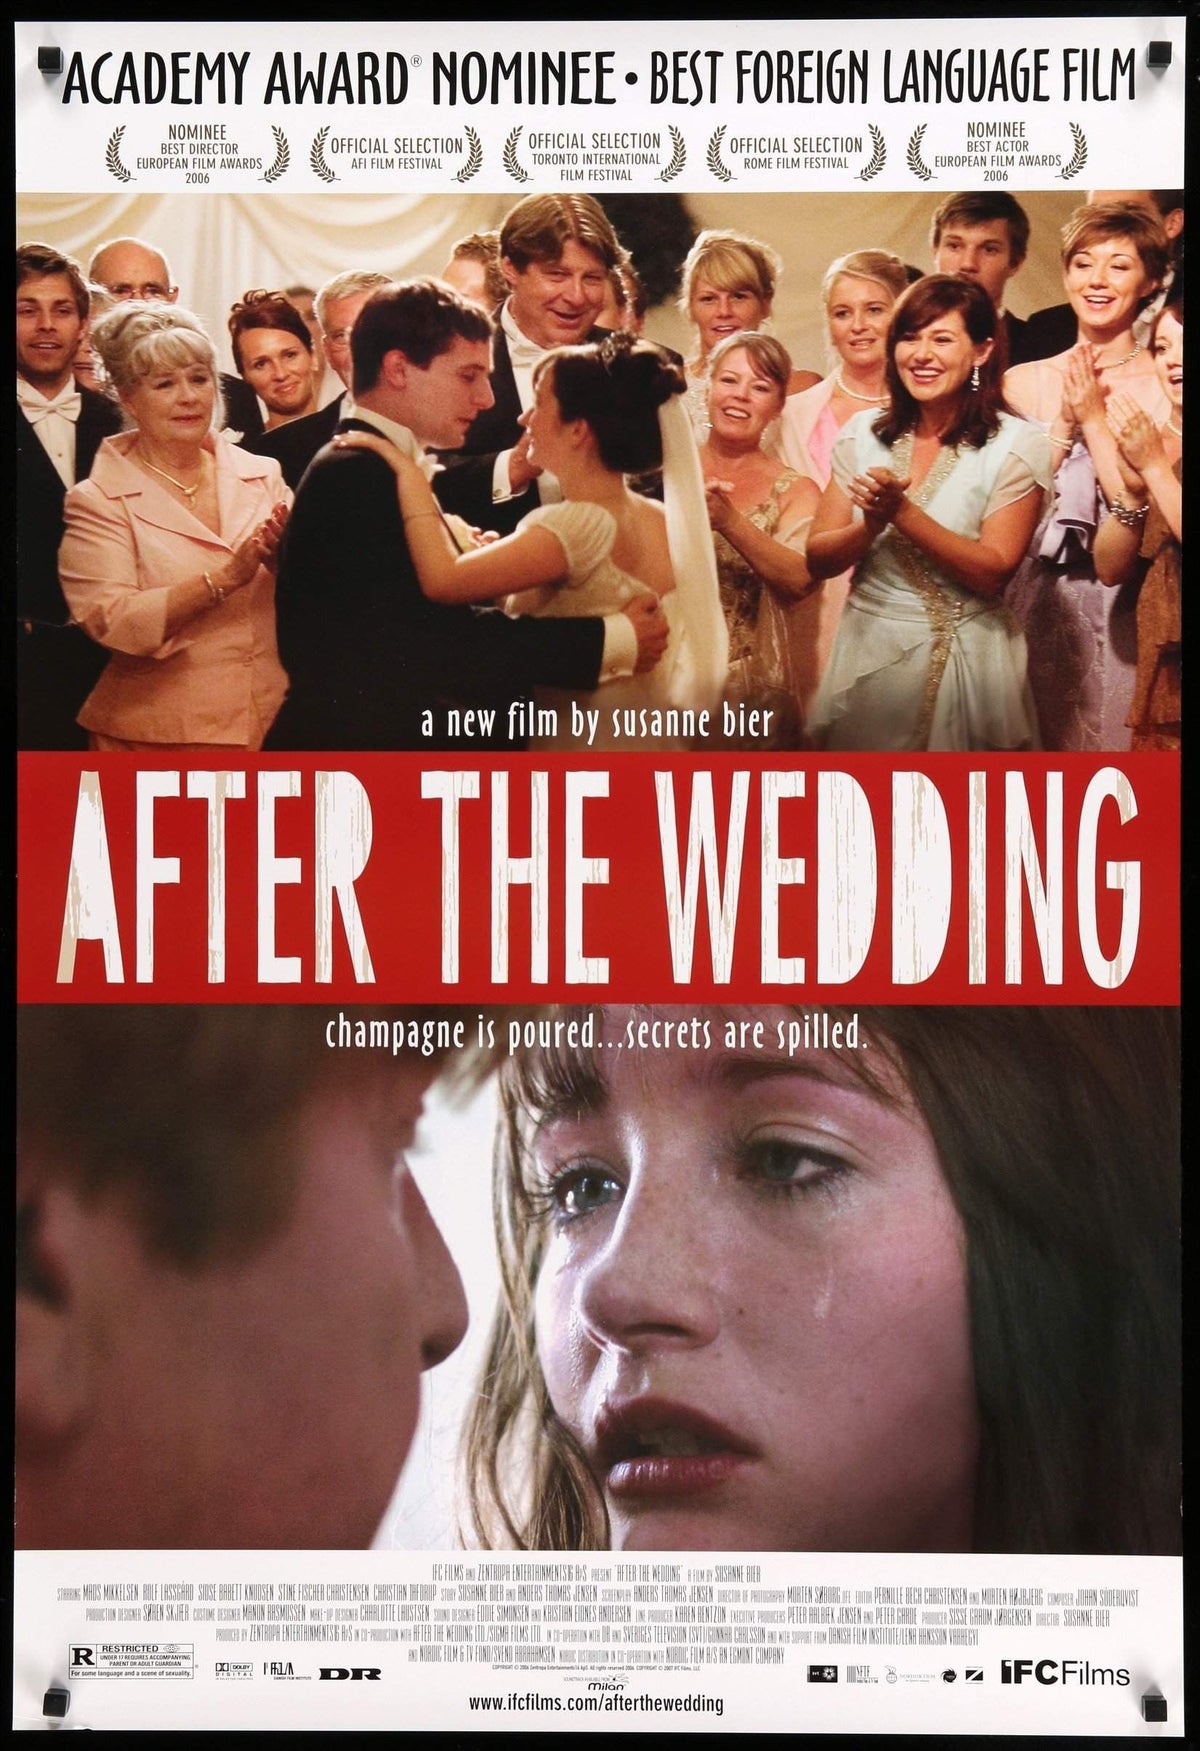 After the Wedding (2006) original movie poster for sale at Original Film Art